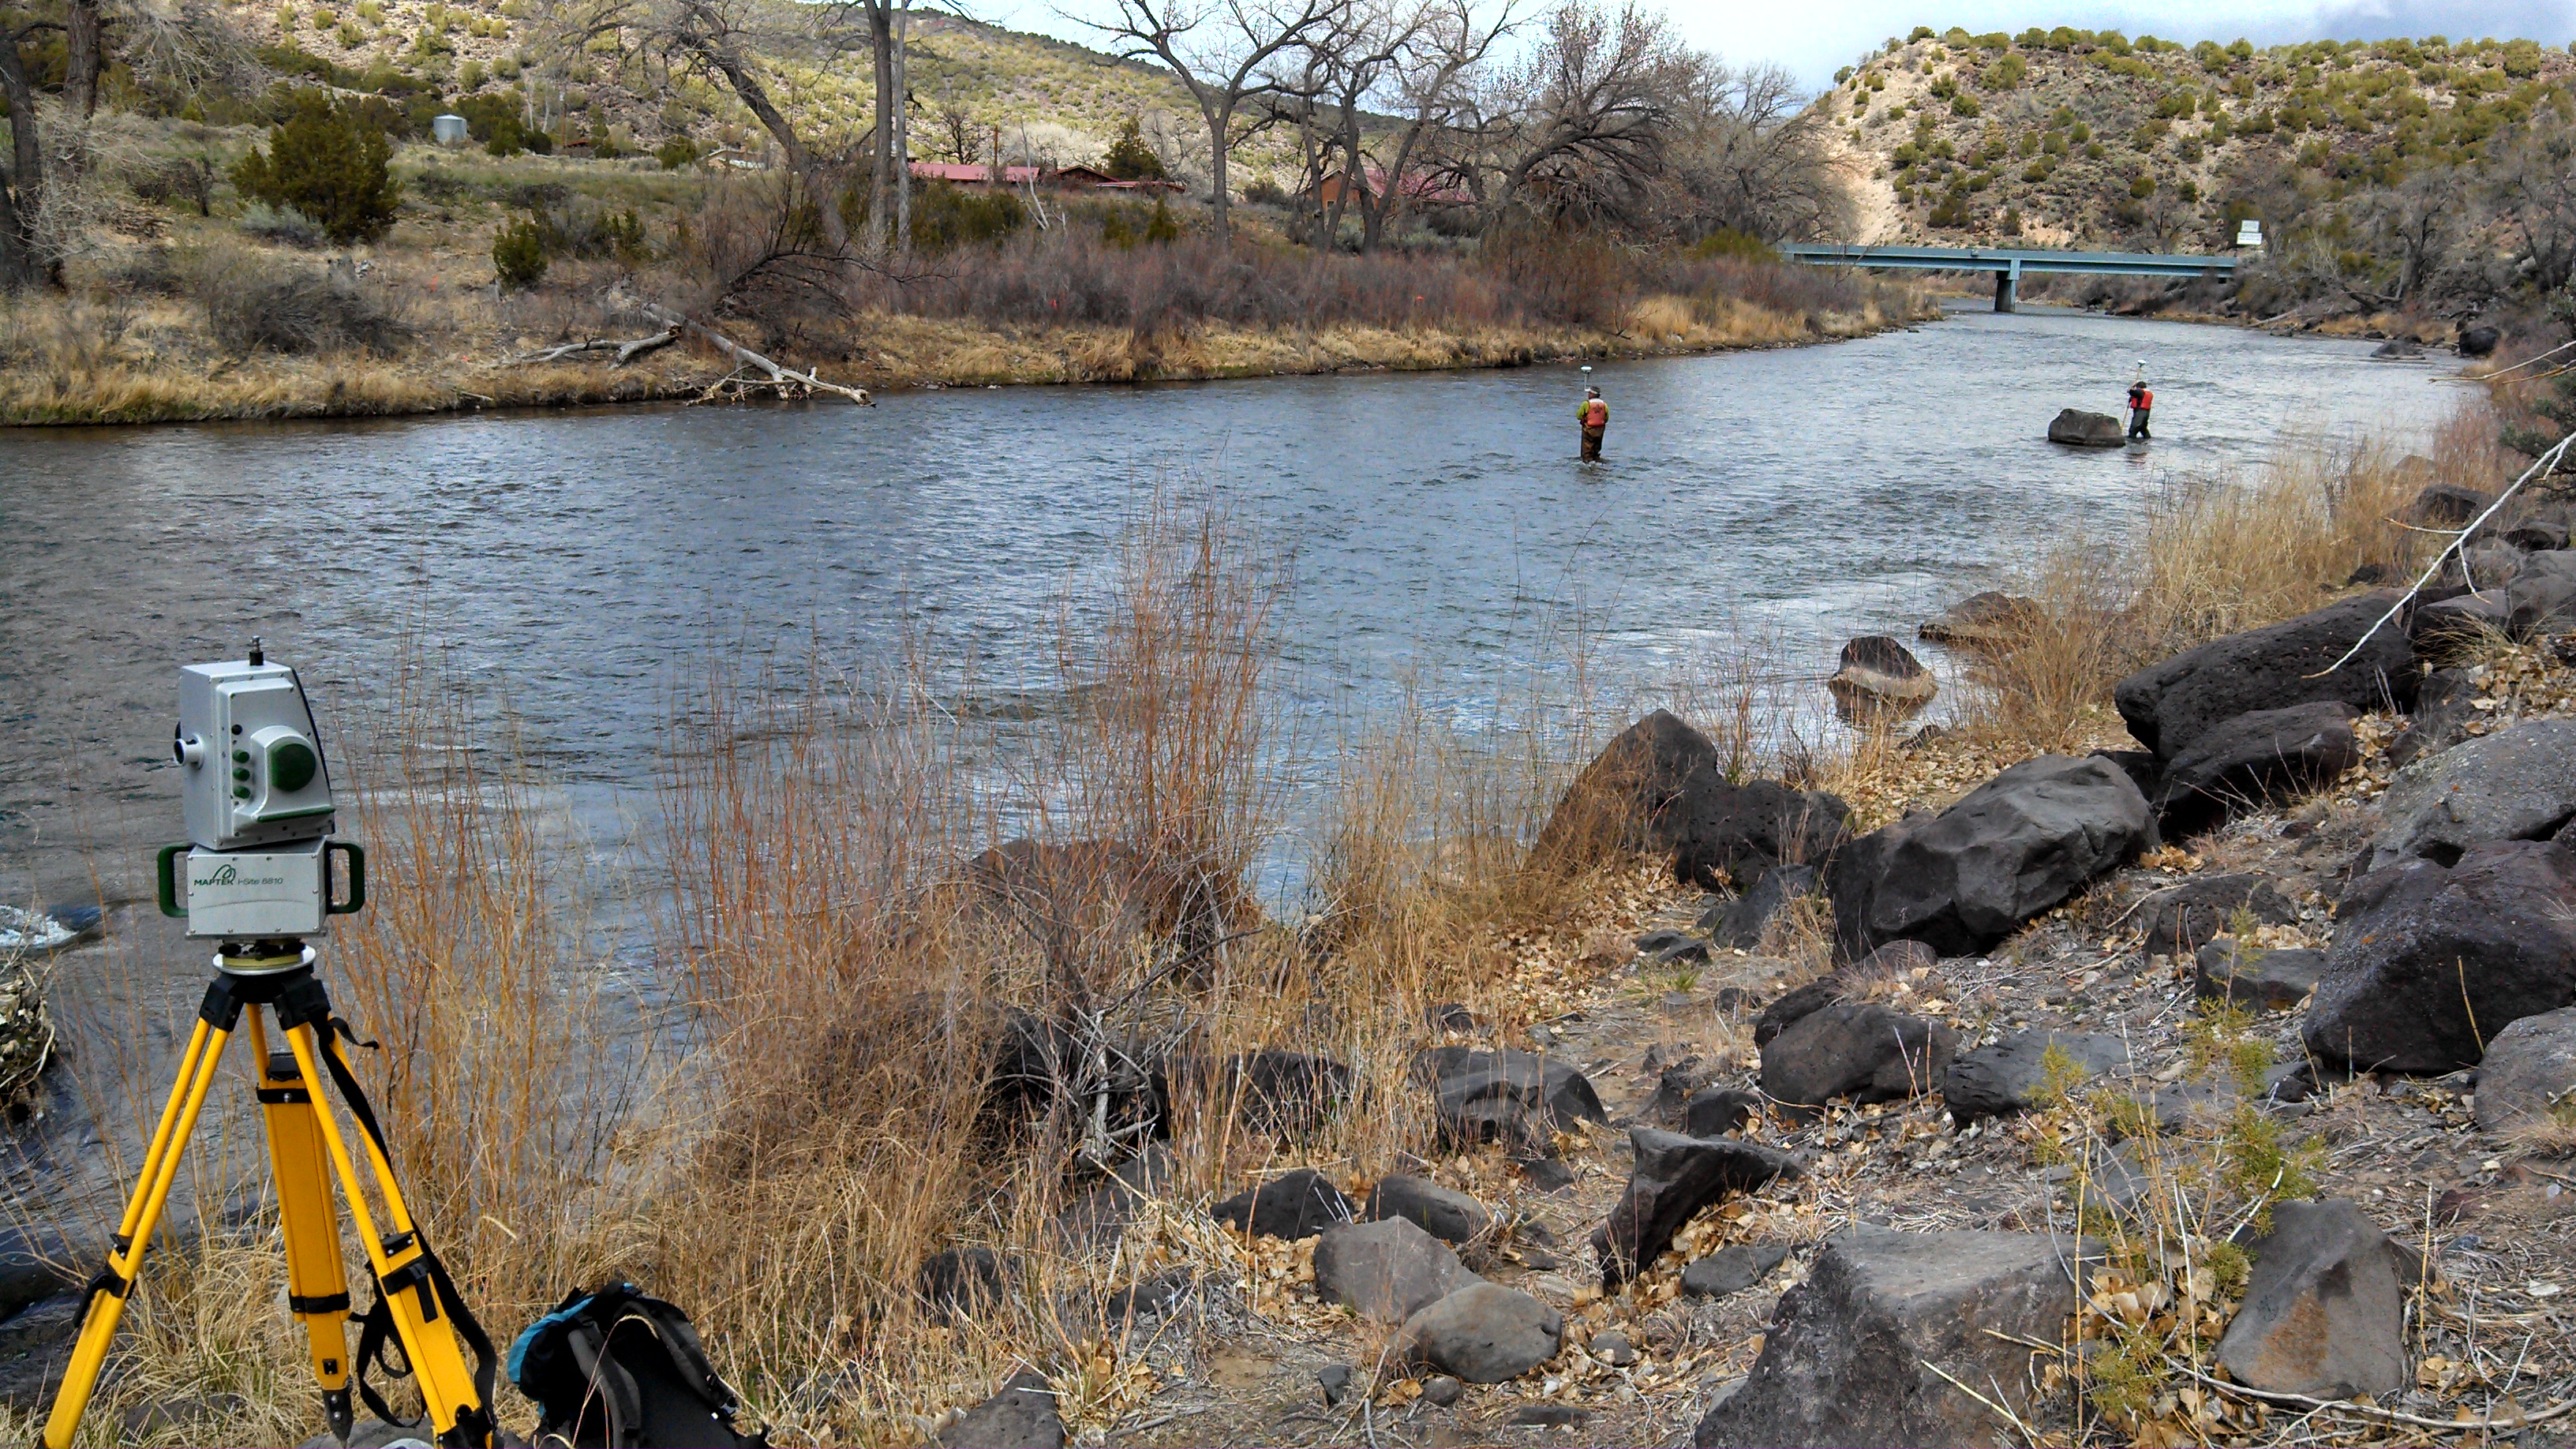 Surveying the Rio Grande River at Embudo, New Mexico.